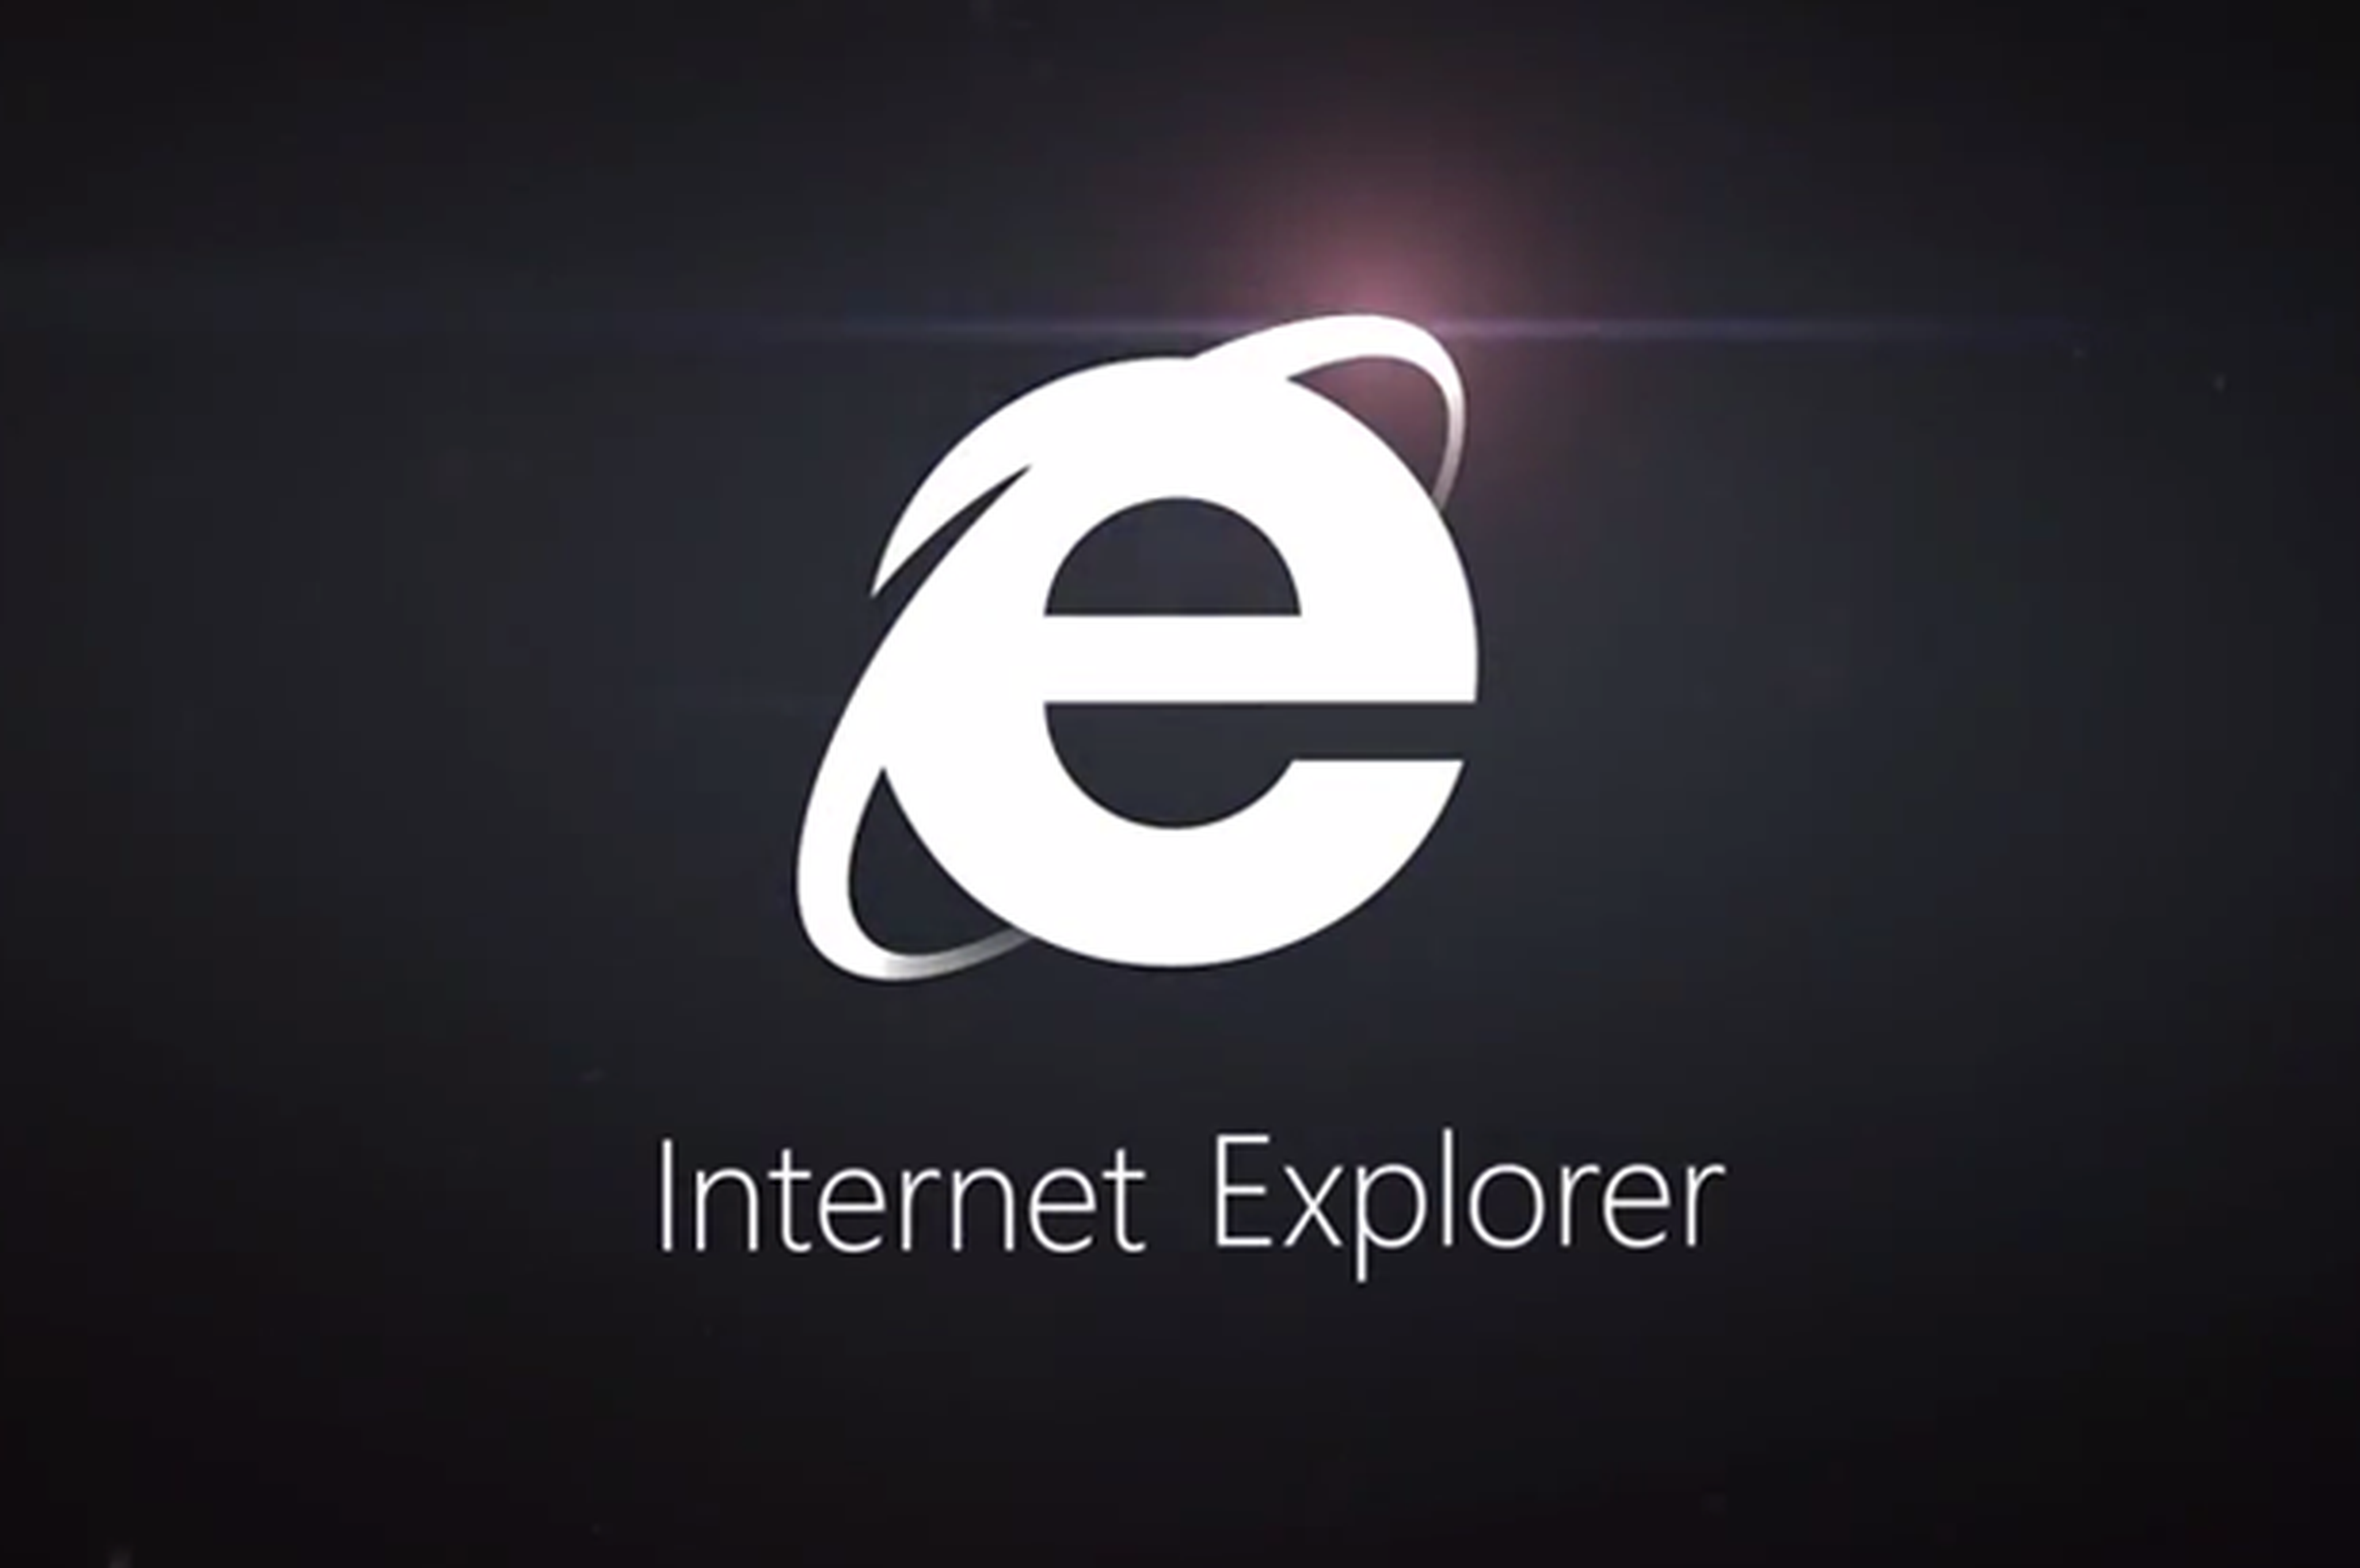 Internet Explorer 11, ya disponible la "Release Preview"